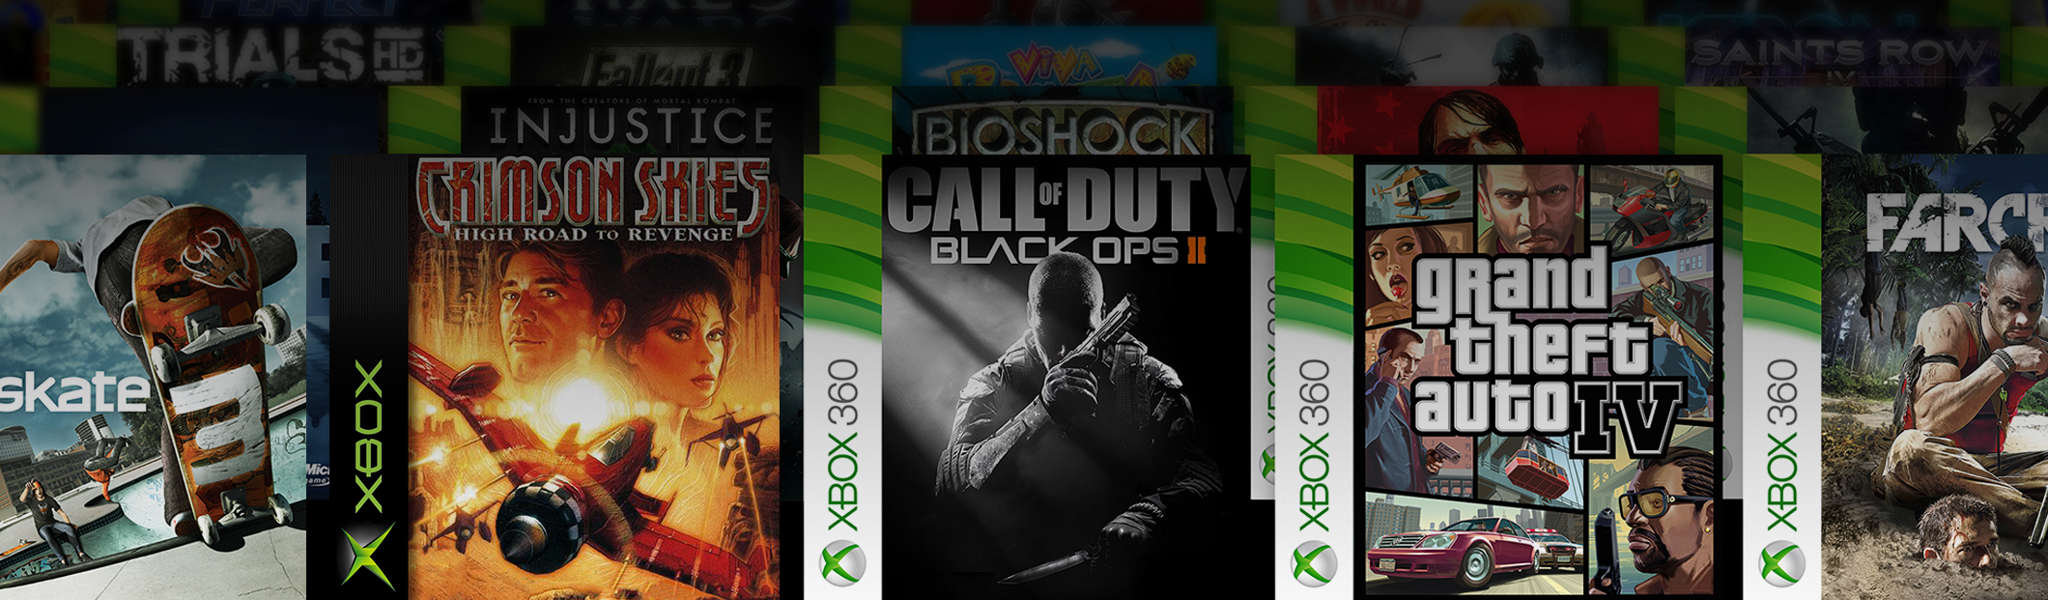 Backwards compatibility on Xbox One X